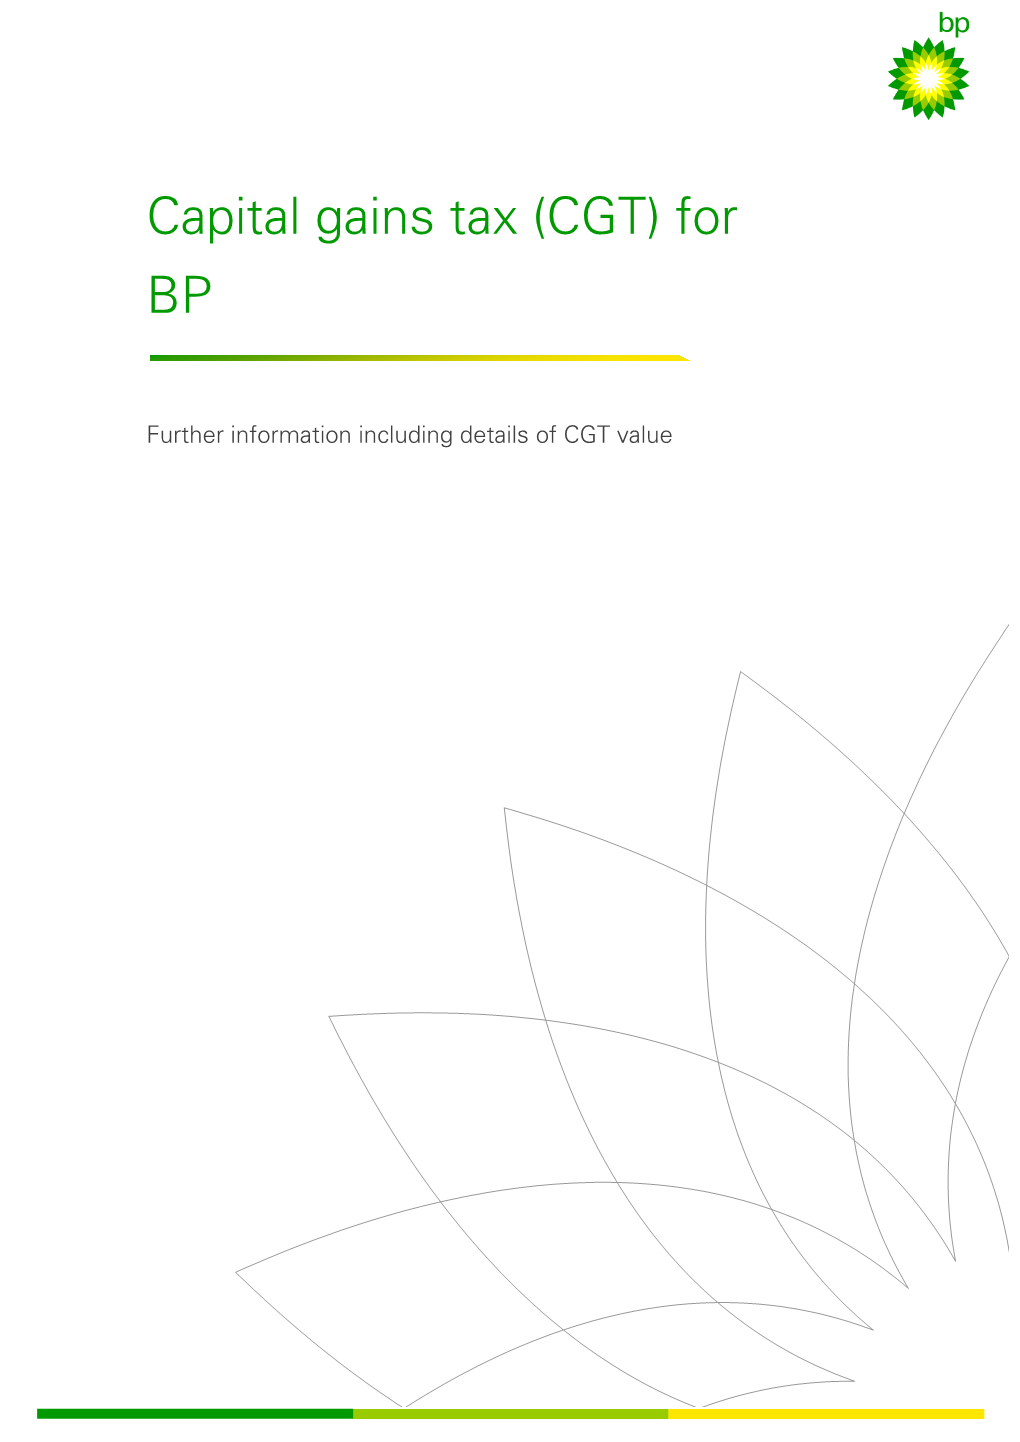 Capital Gains Tax (CGT) for BP